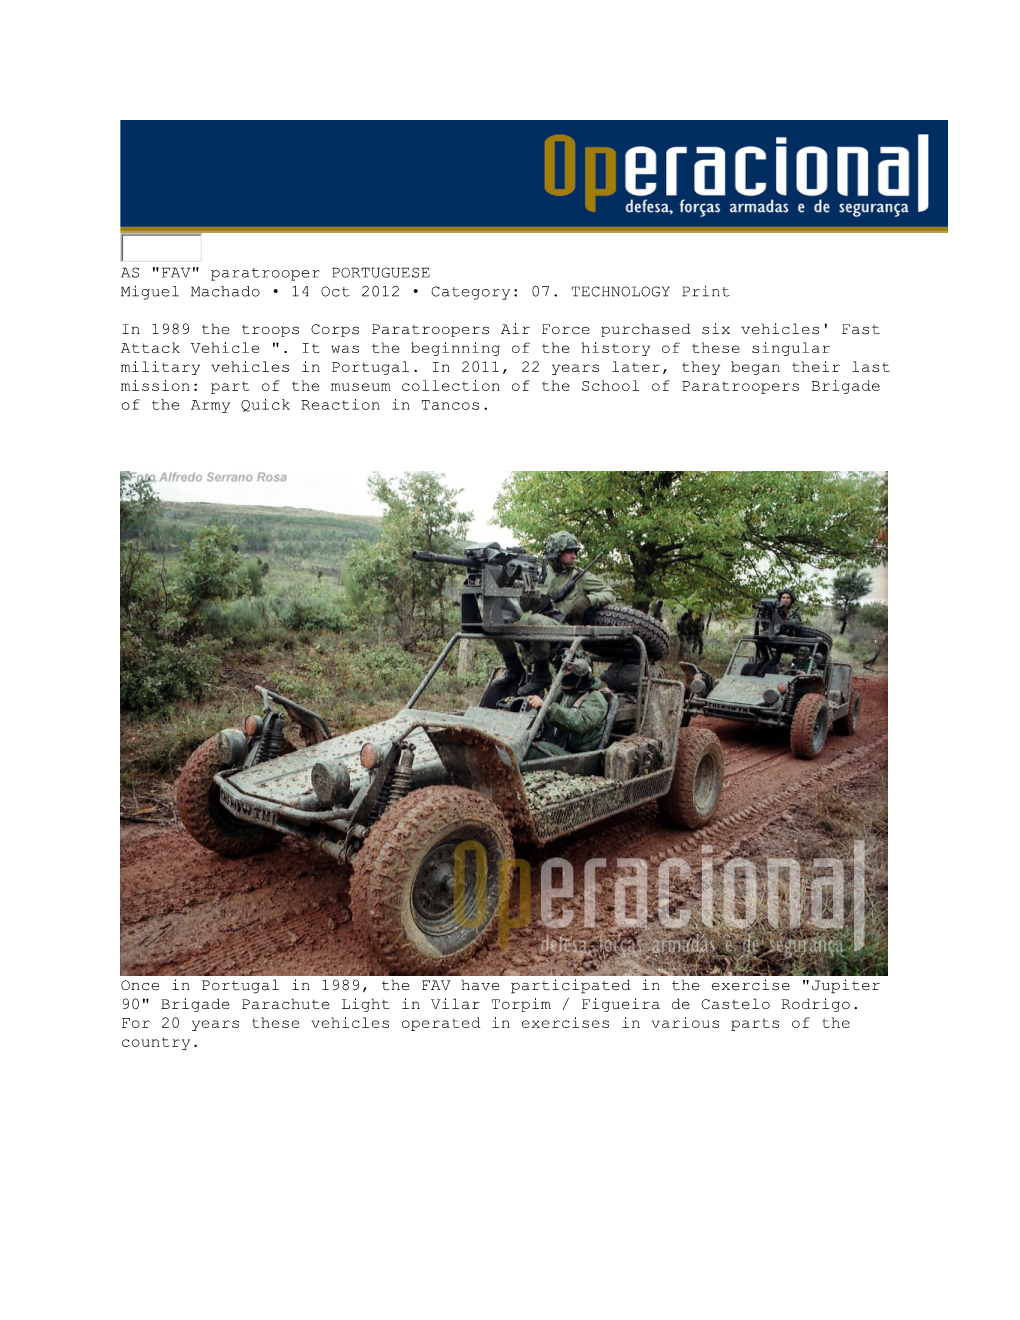 AS "FAV" Paratrooper PORTUGUESE Miguel Machado • 14 Oct 2012 • Category: 07